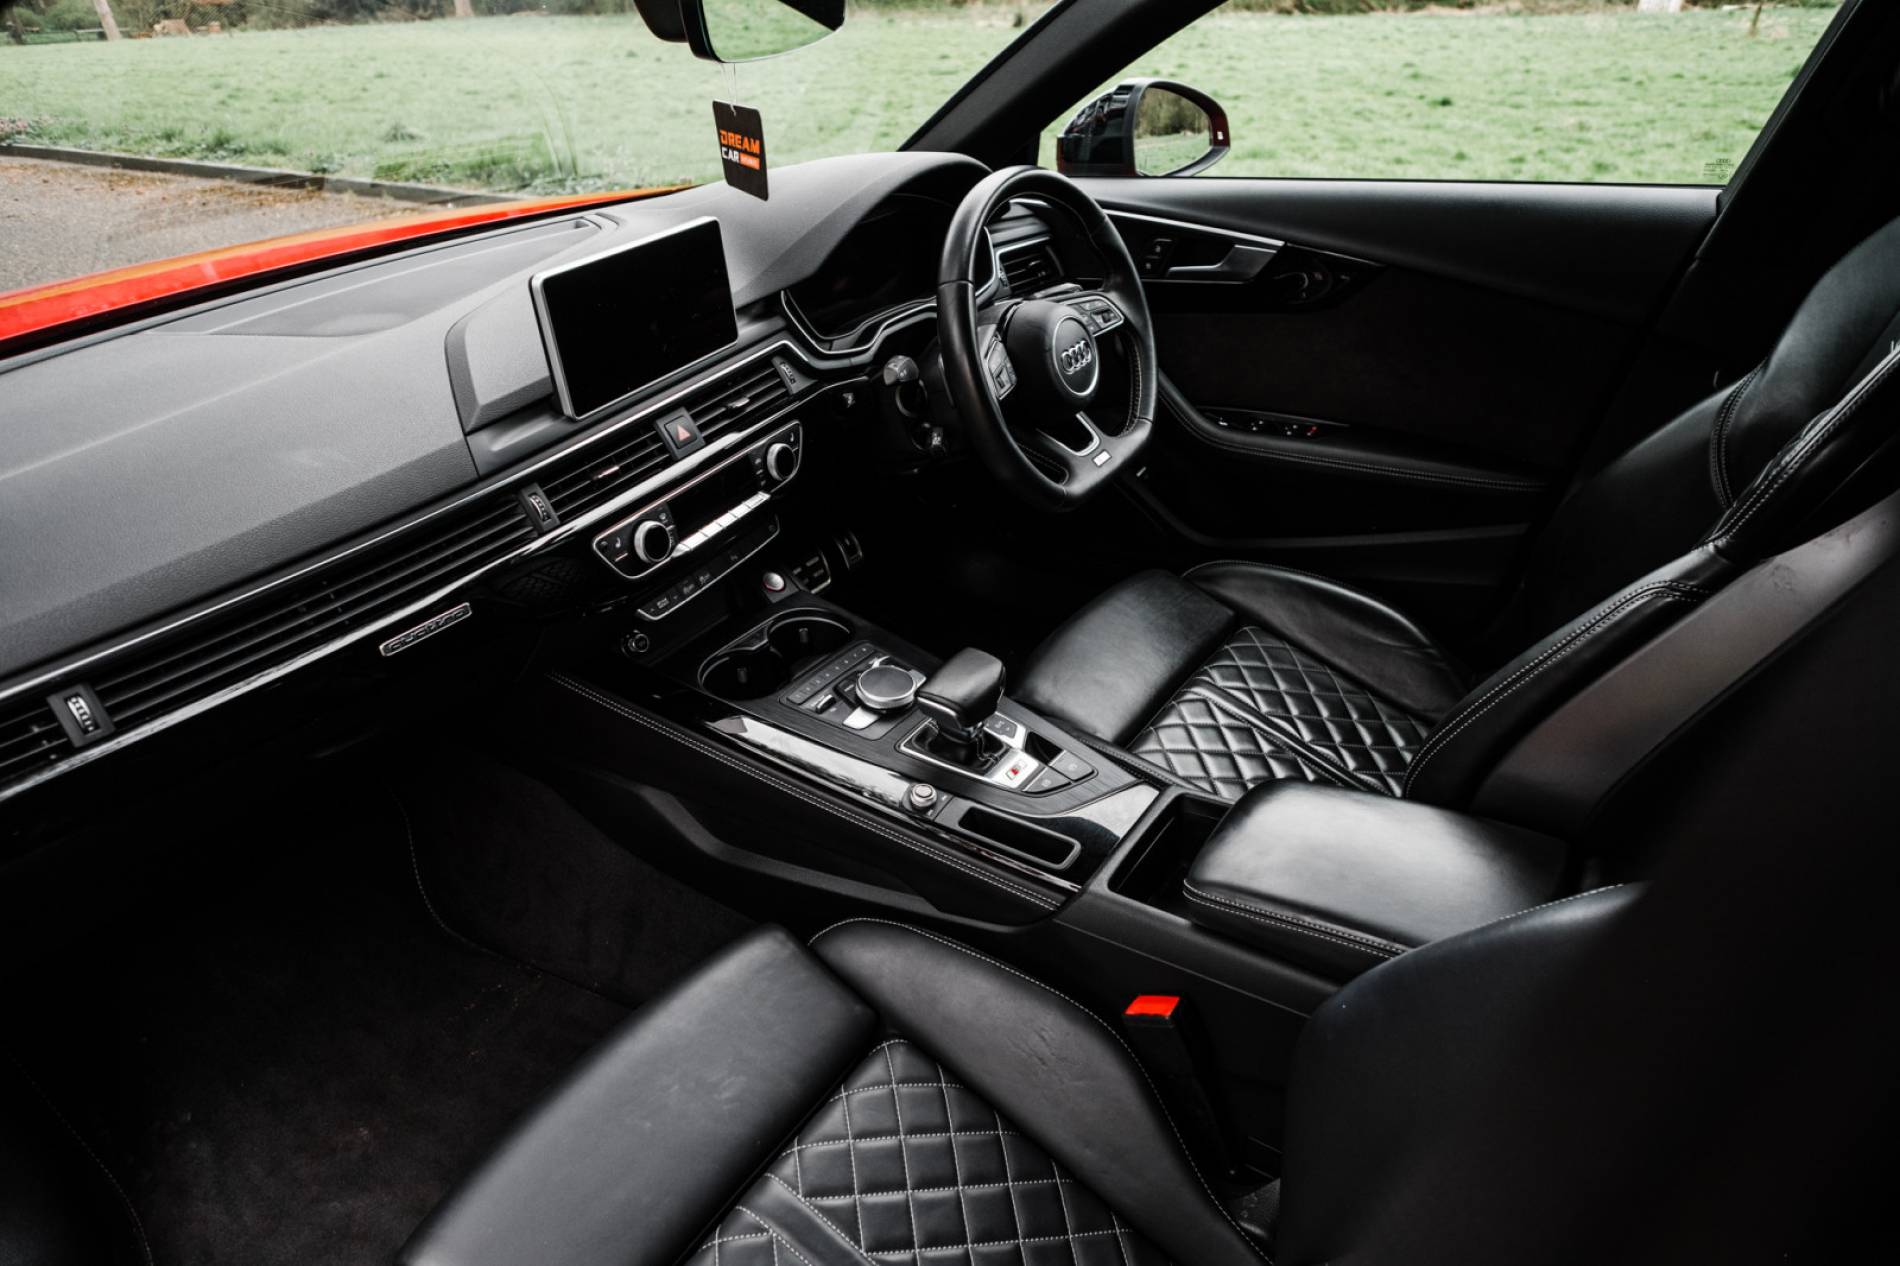 2017 Audi S4 Avant &amp; £1500 or £25,000 Tax Free